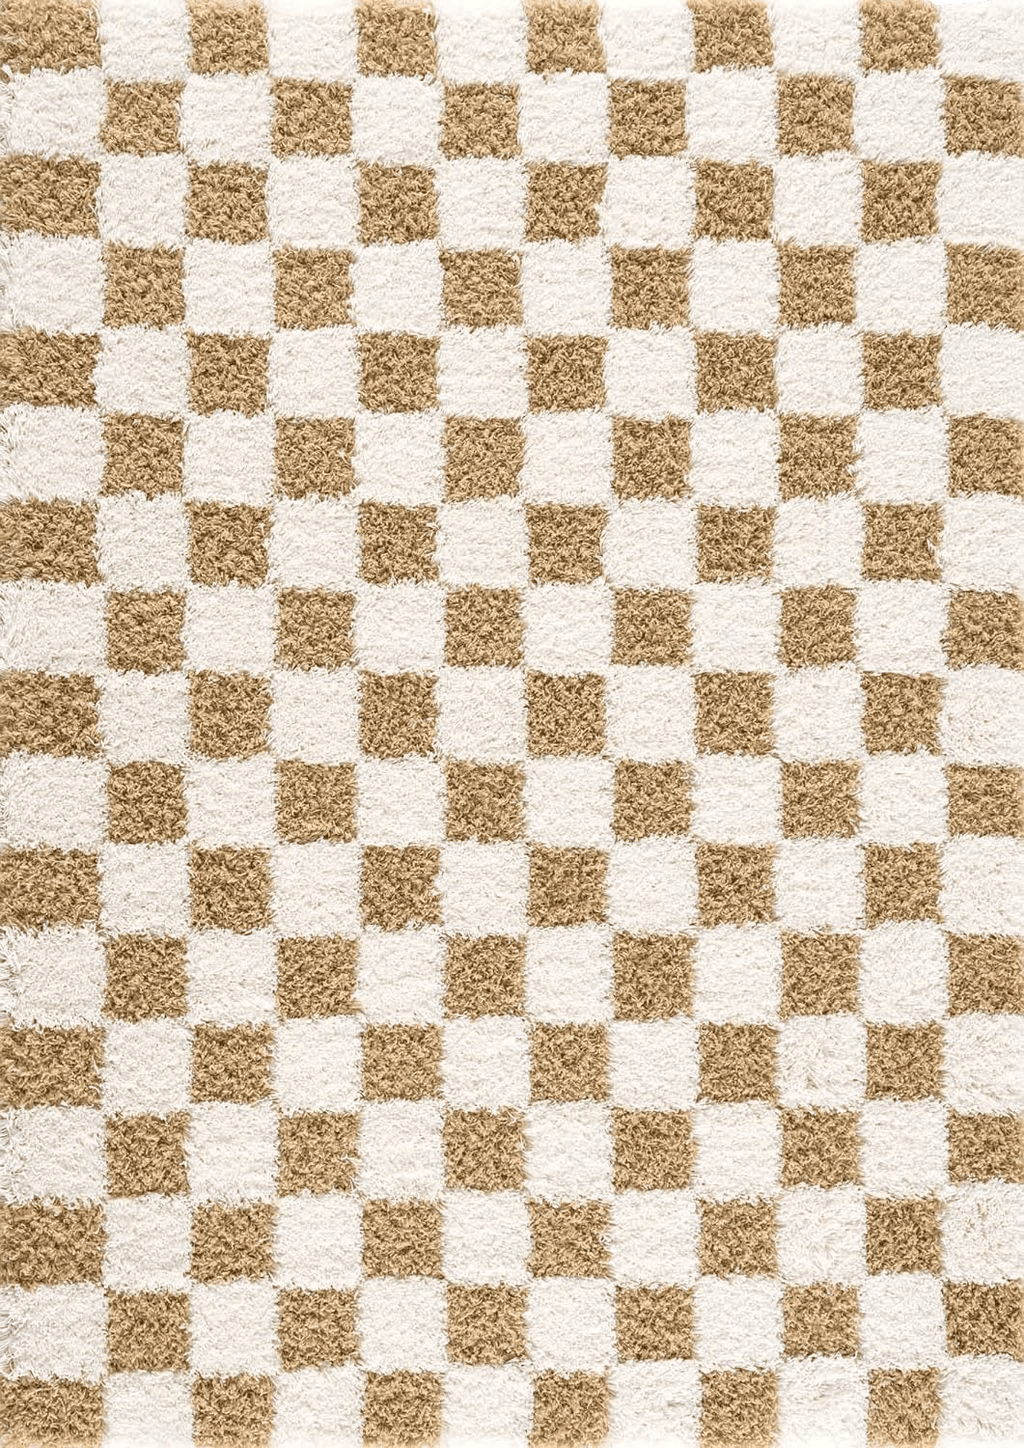 Hauteloom Atira Checkered Shag Area Rug - Checkboard Design - High Pile Fluffy Shaggy Touch - Square Tiles - Kids Room, Nursery, Living Room Shaggy Carpet - Yellow, Cream, White - 5'3" x 7'3"